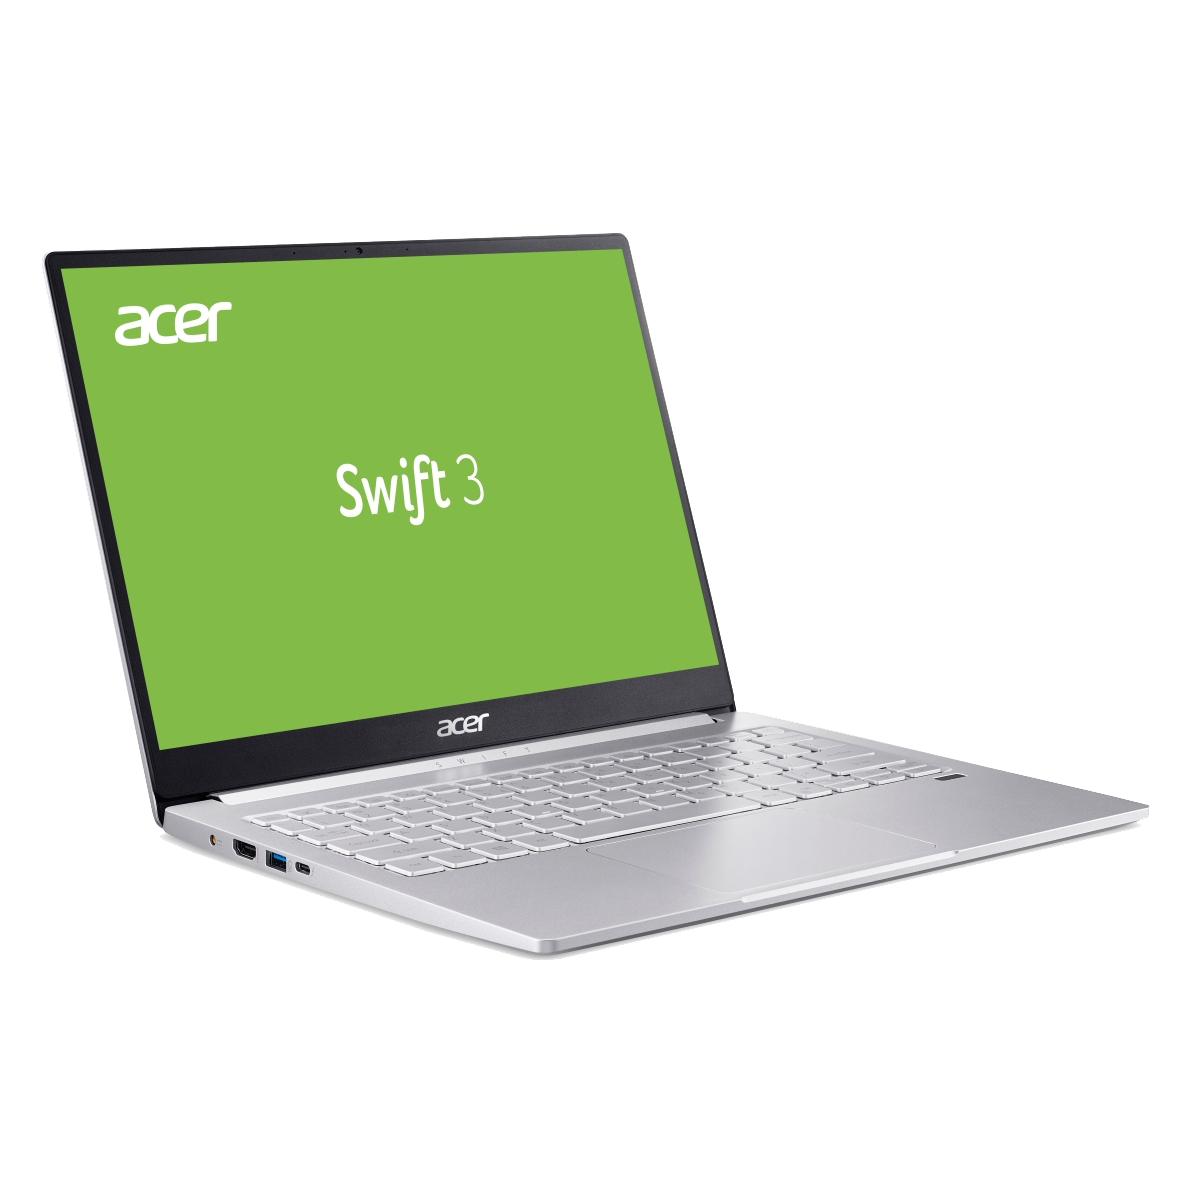 Acer SWITFT3 13 i7 1TB silver - Ohne Vertrag